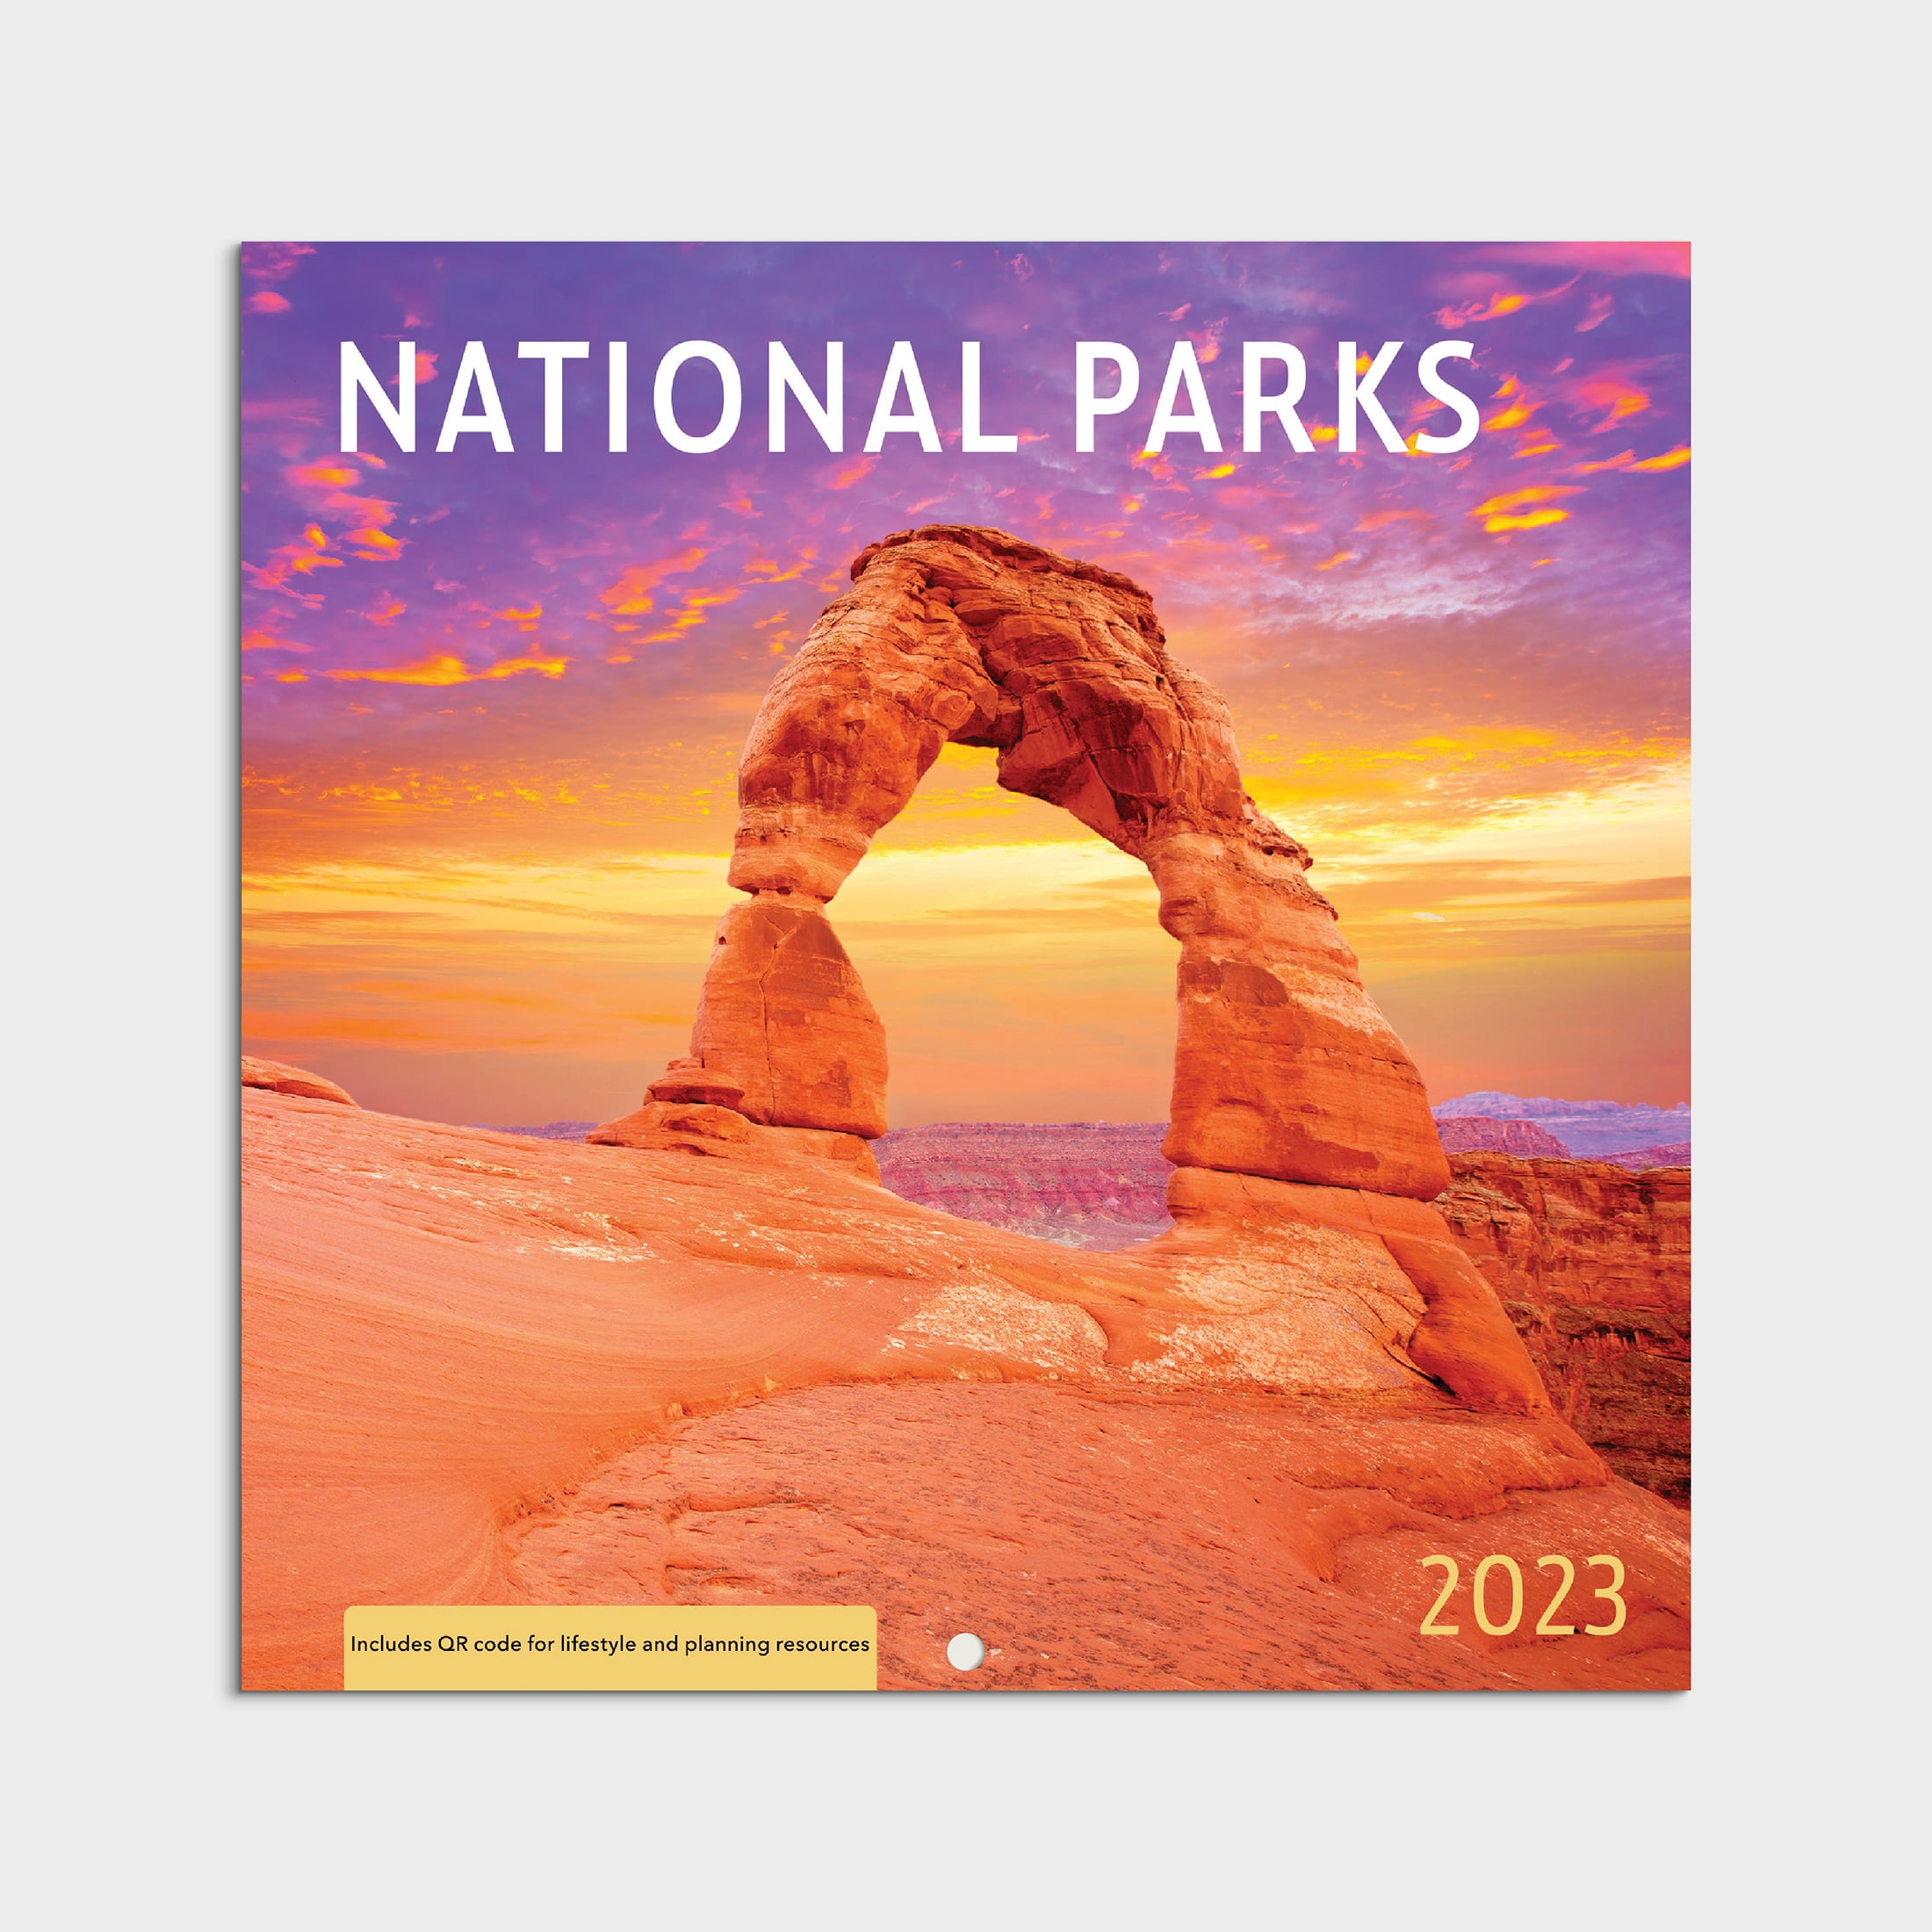 2023 Mini Wall Calendar - National Parks- 7"x7" by Dayspring